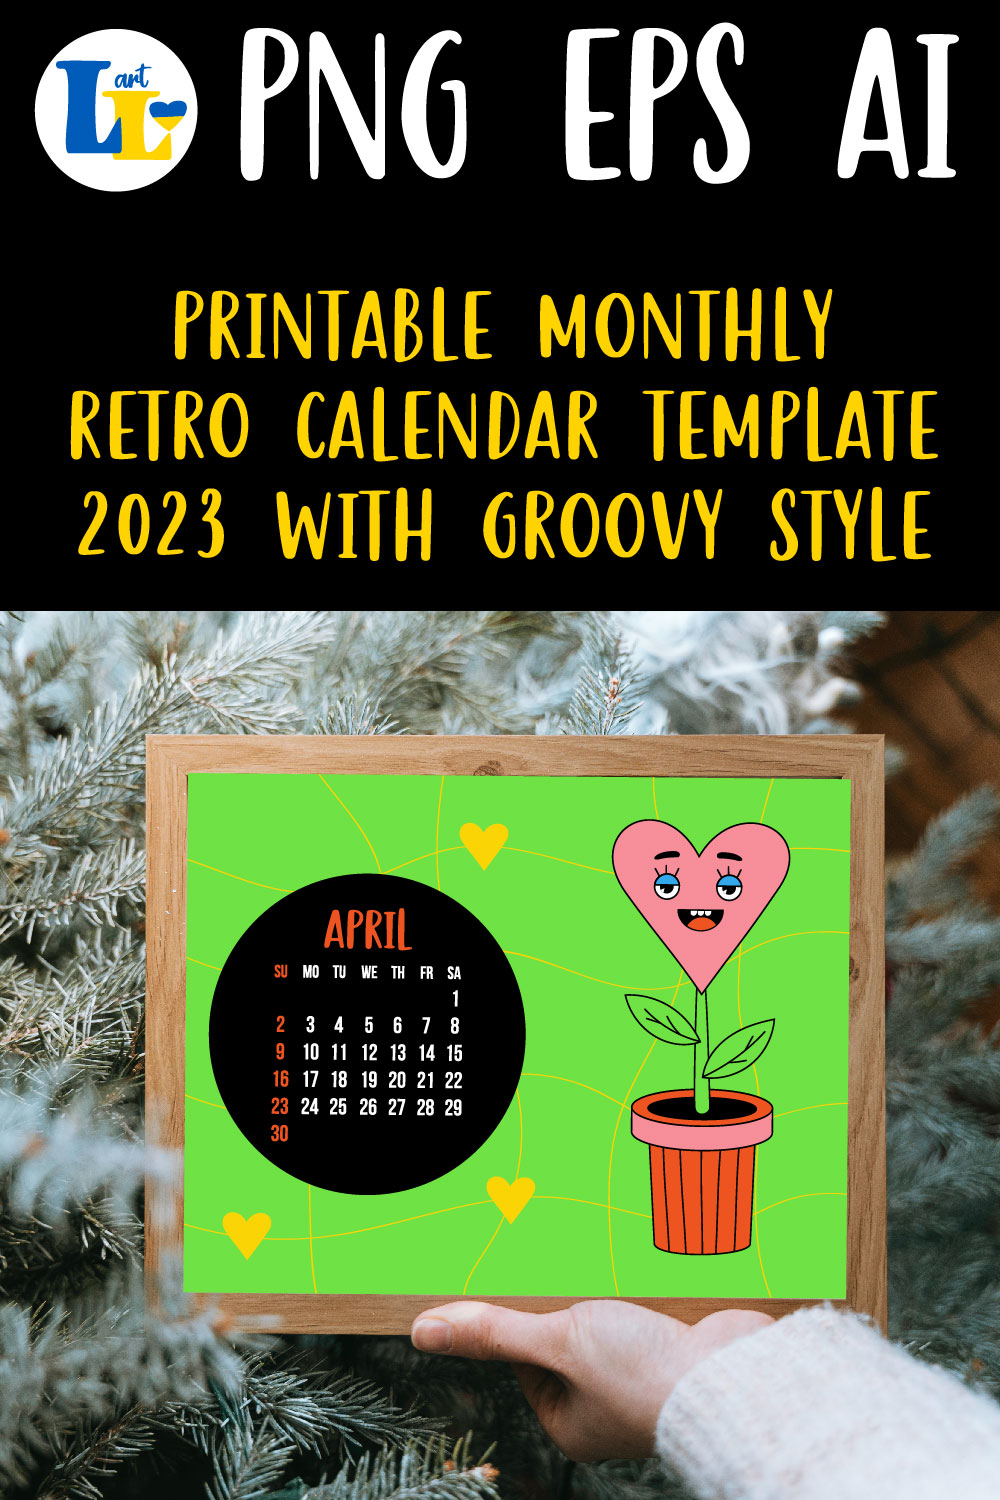 Retro Groovy Desktop Calendar 2023 Printable Monthly Template pinterest image.